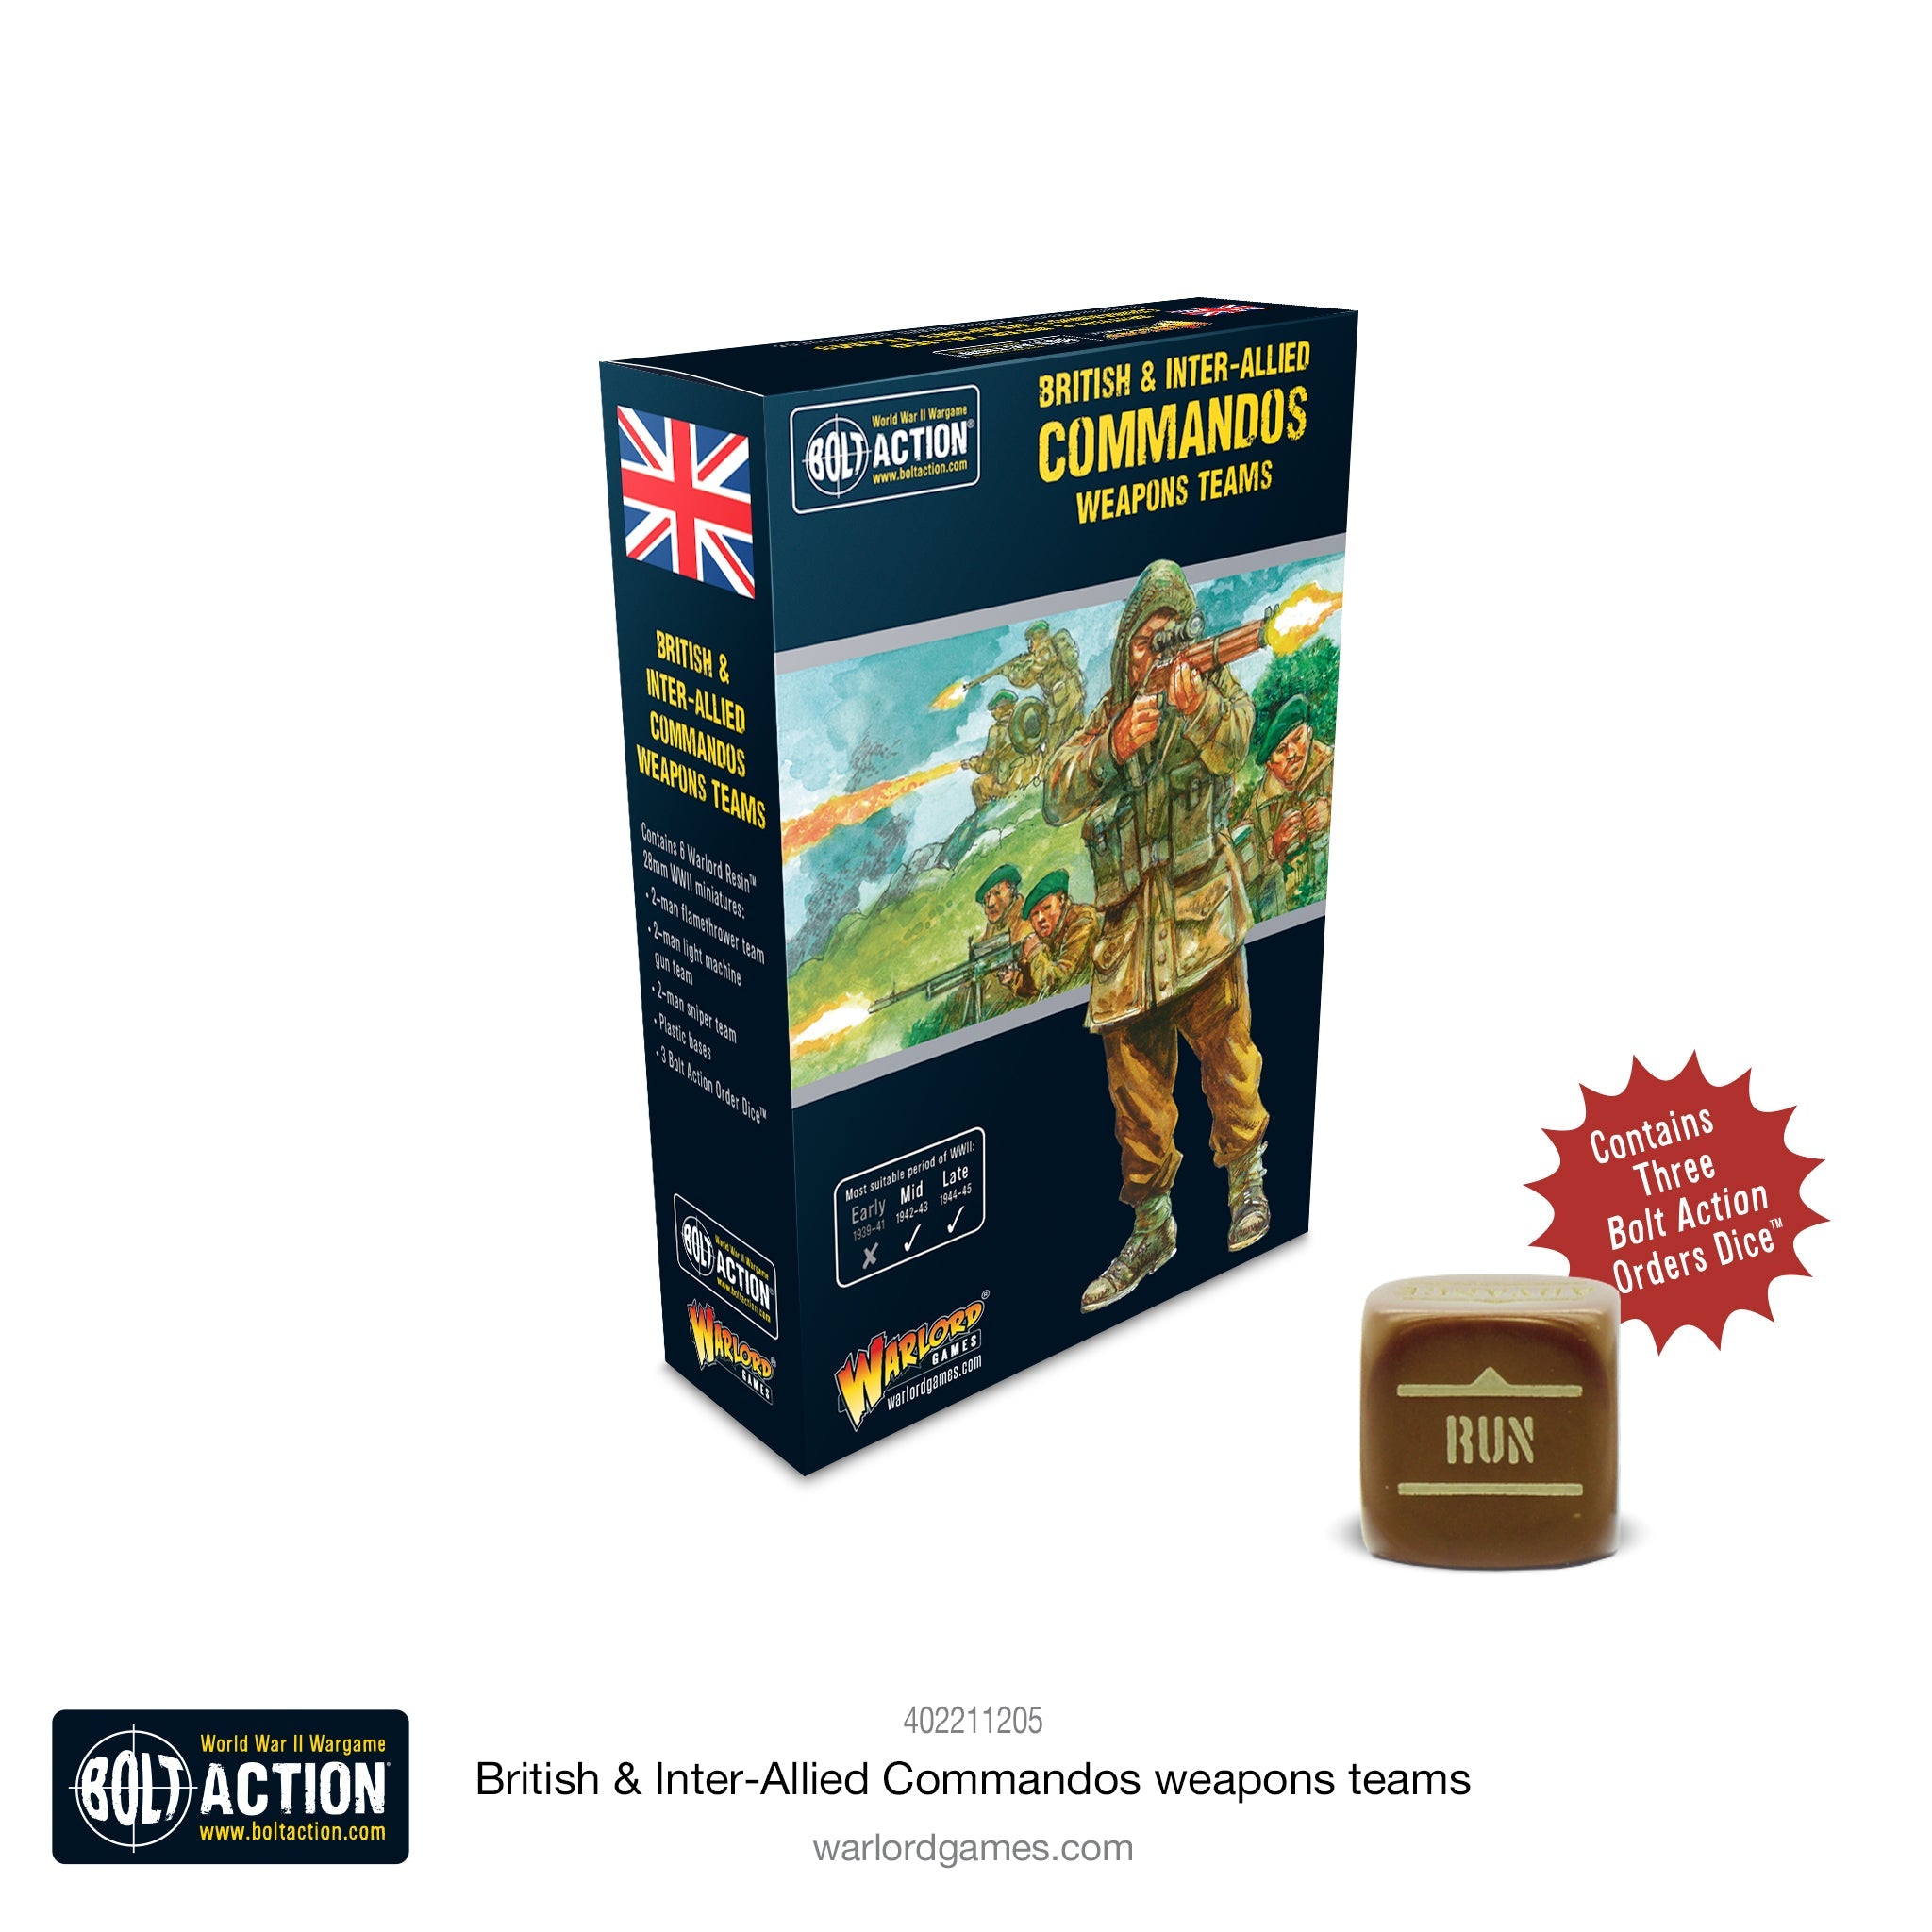 British & Inter-Allied Commandos weapons teams